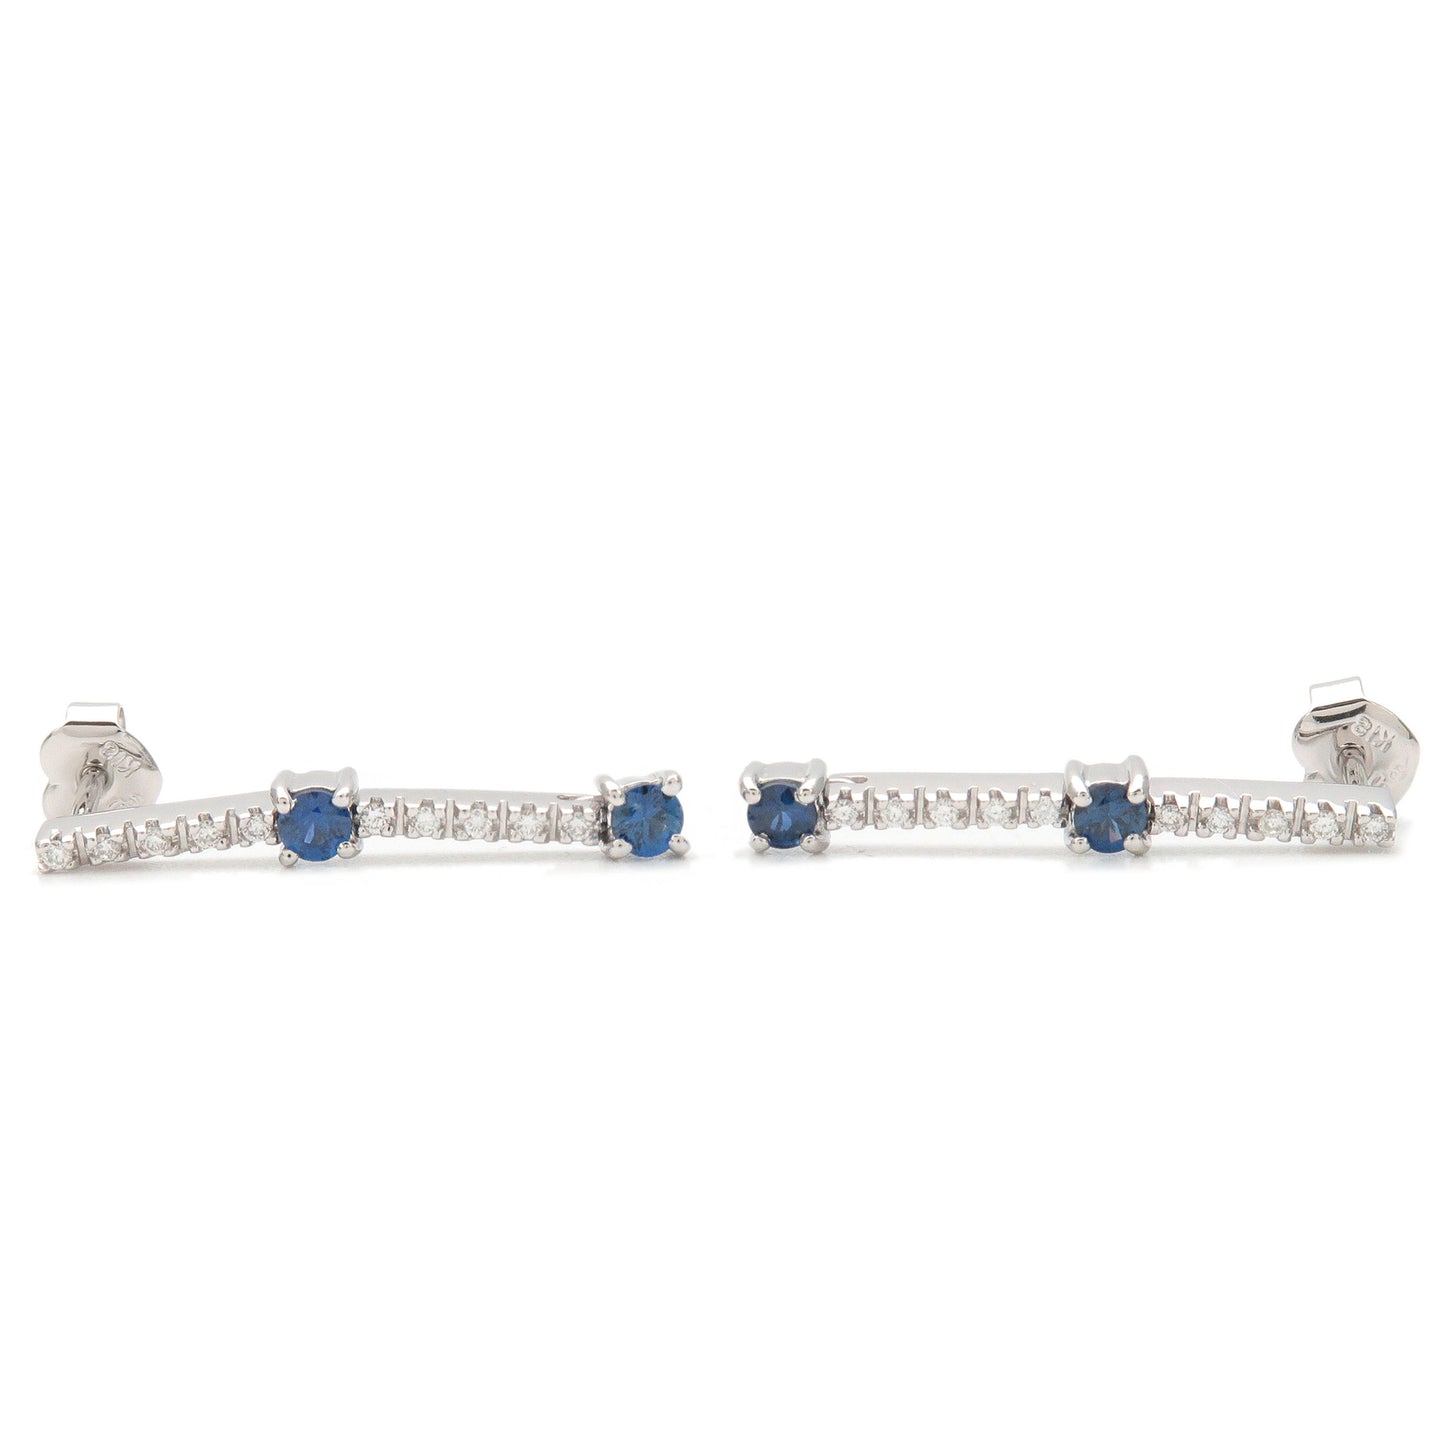 STAR-JEWELRY-Diamond-Sapphire-Earrings-K18WG-750-White-Gold